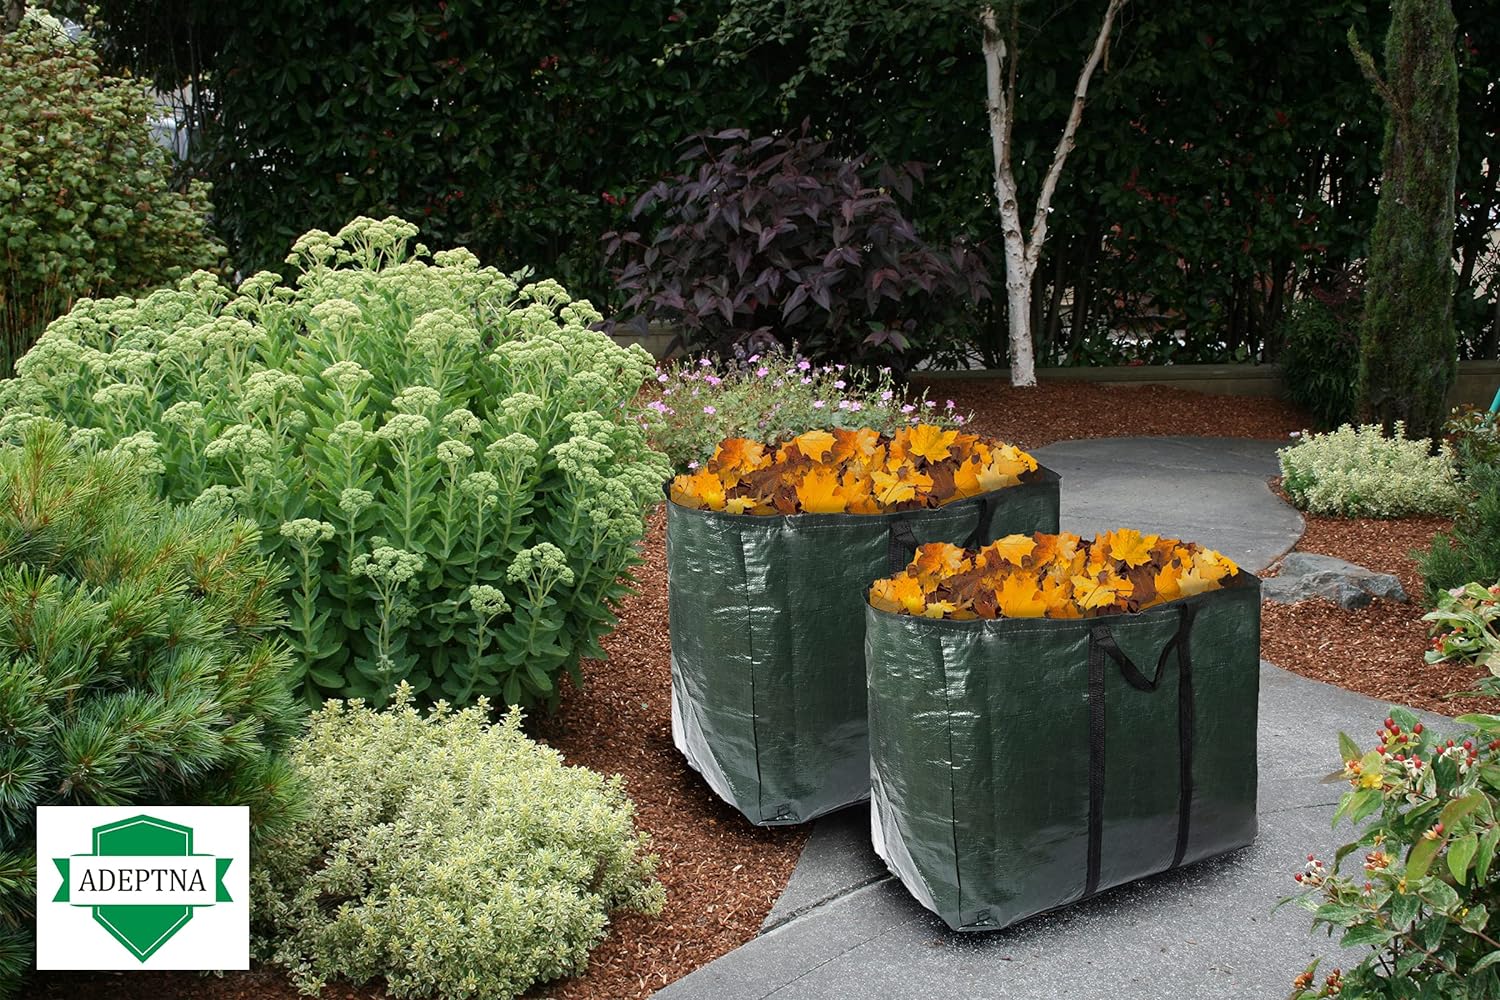 ADEPTNA Set of 2 Large Heavy Duty 150 Litre Garden Bags Waste Refuse Rubbish Grass Sack Waterproof Reusable